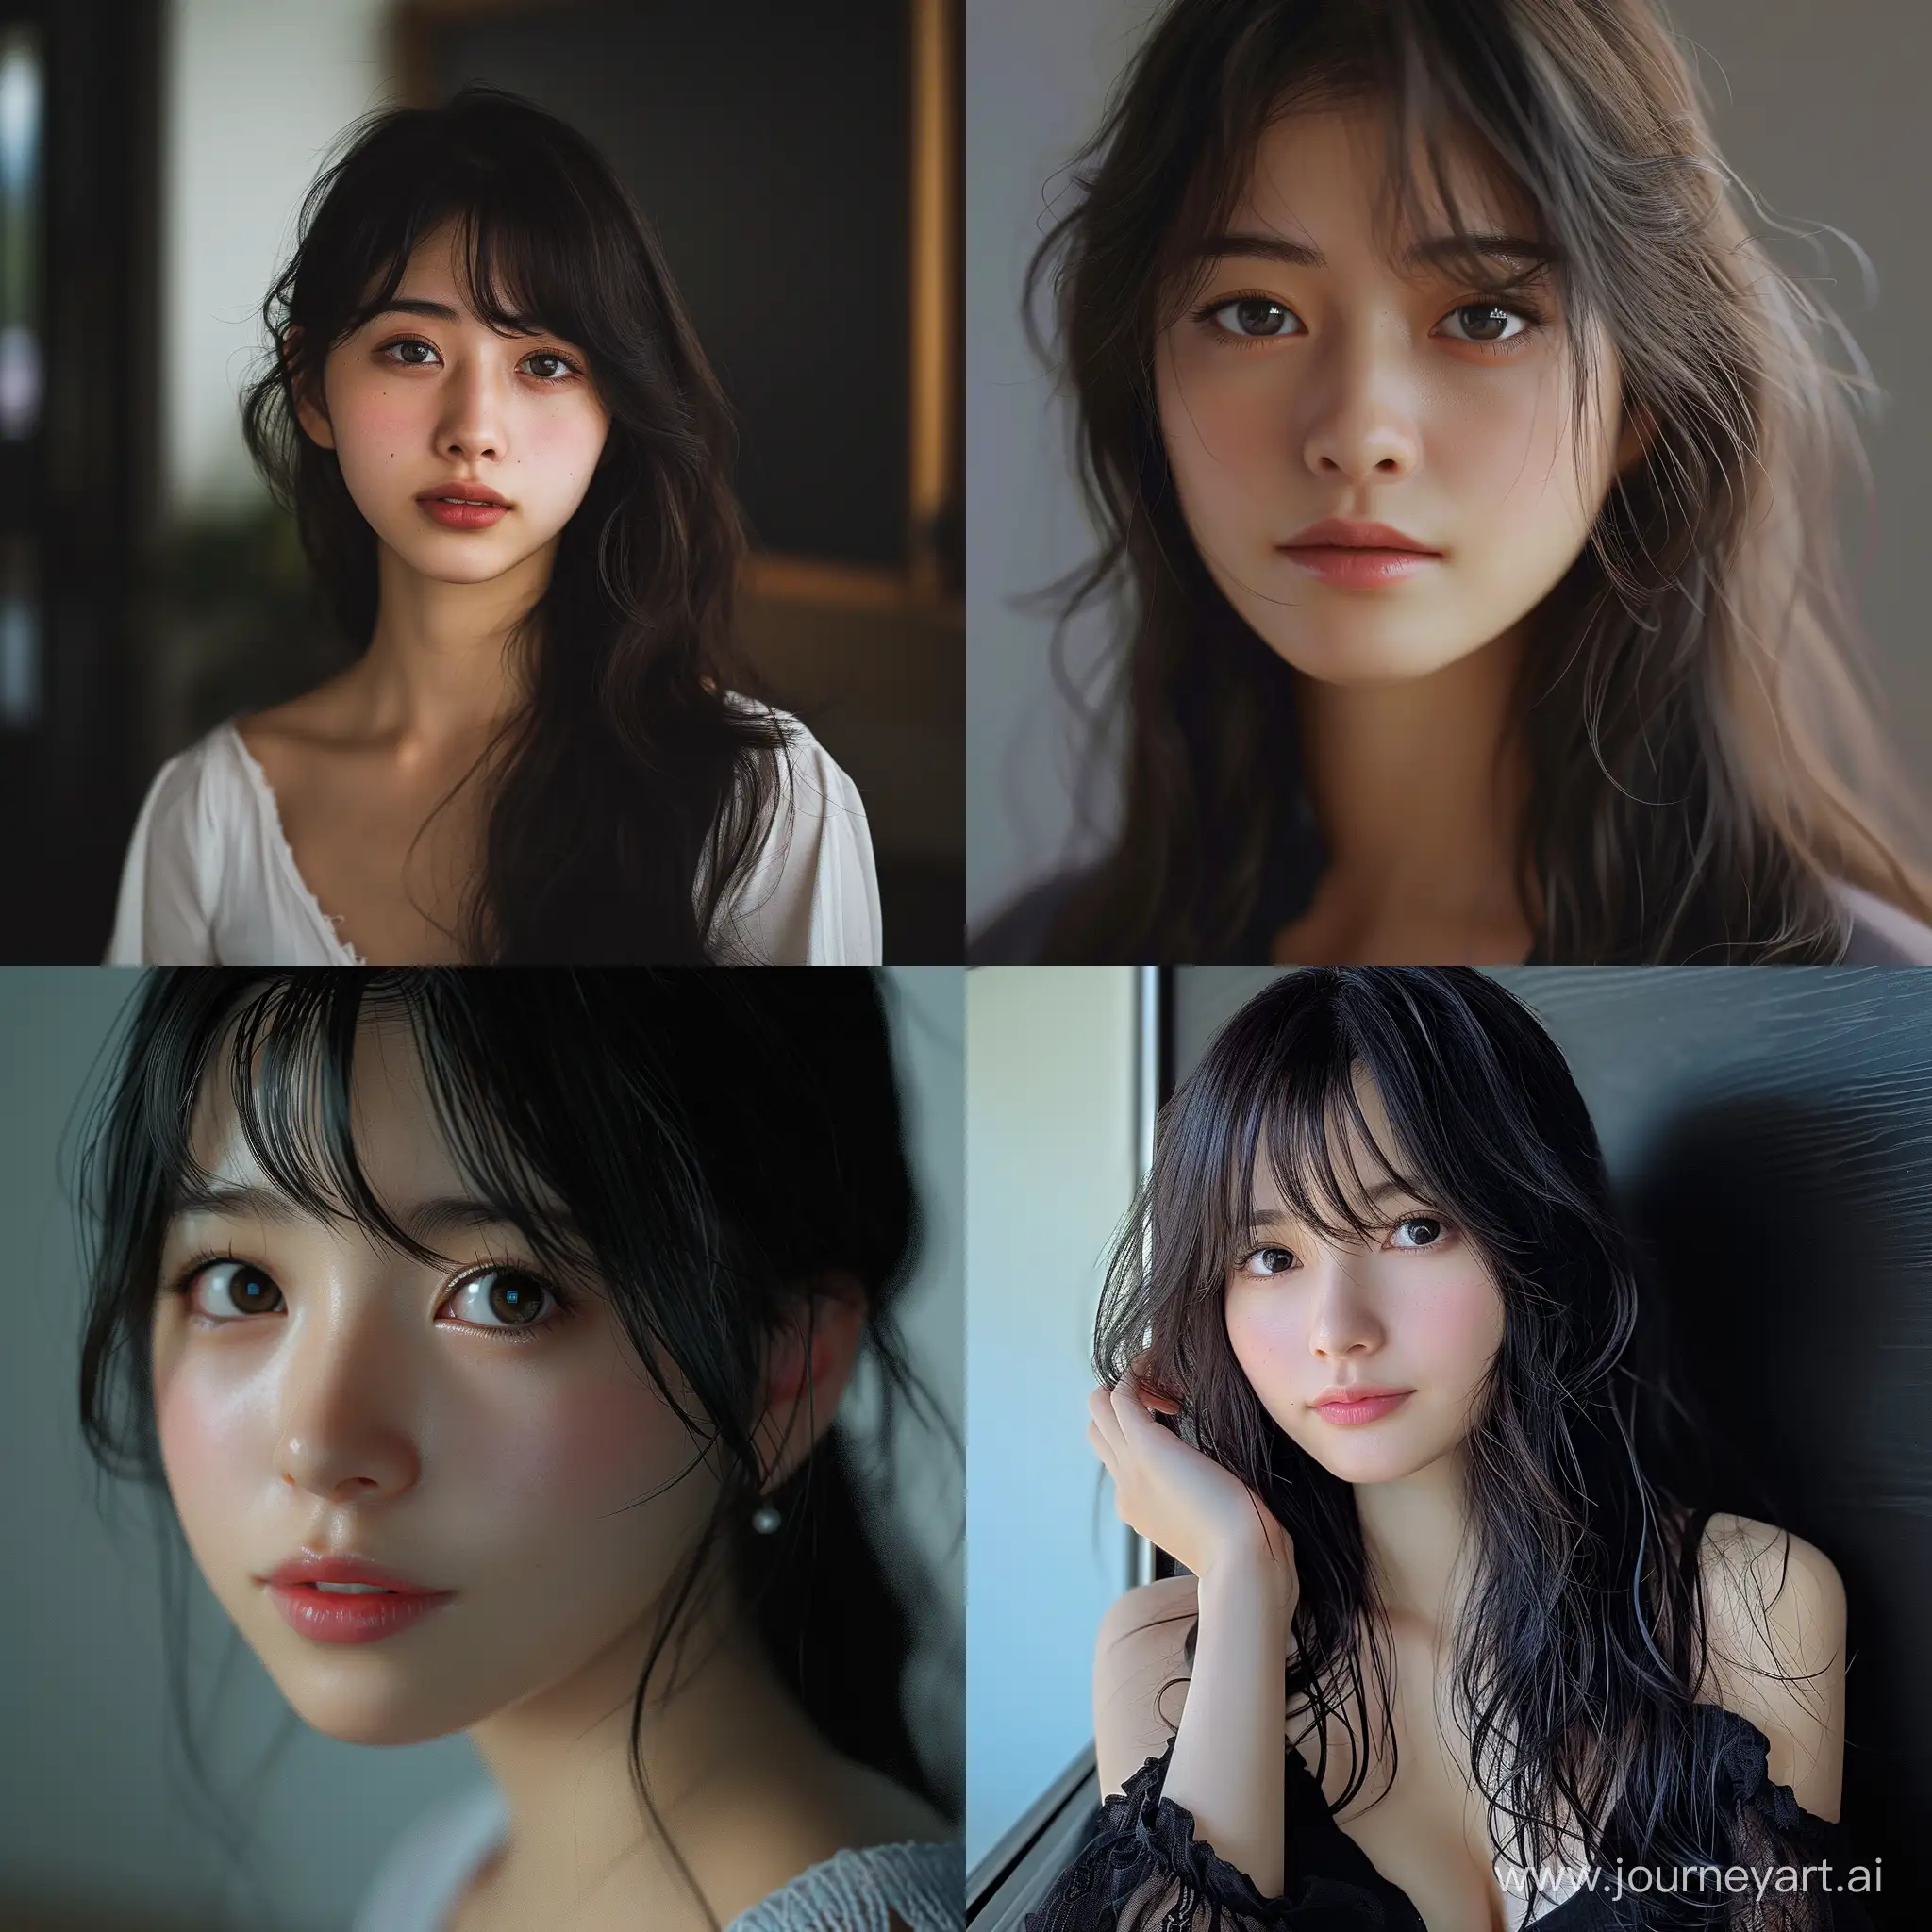 Japanese-Insta-Girl-in-Stunning-8K-Realistic-Photo